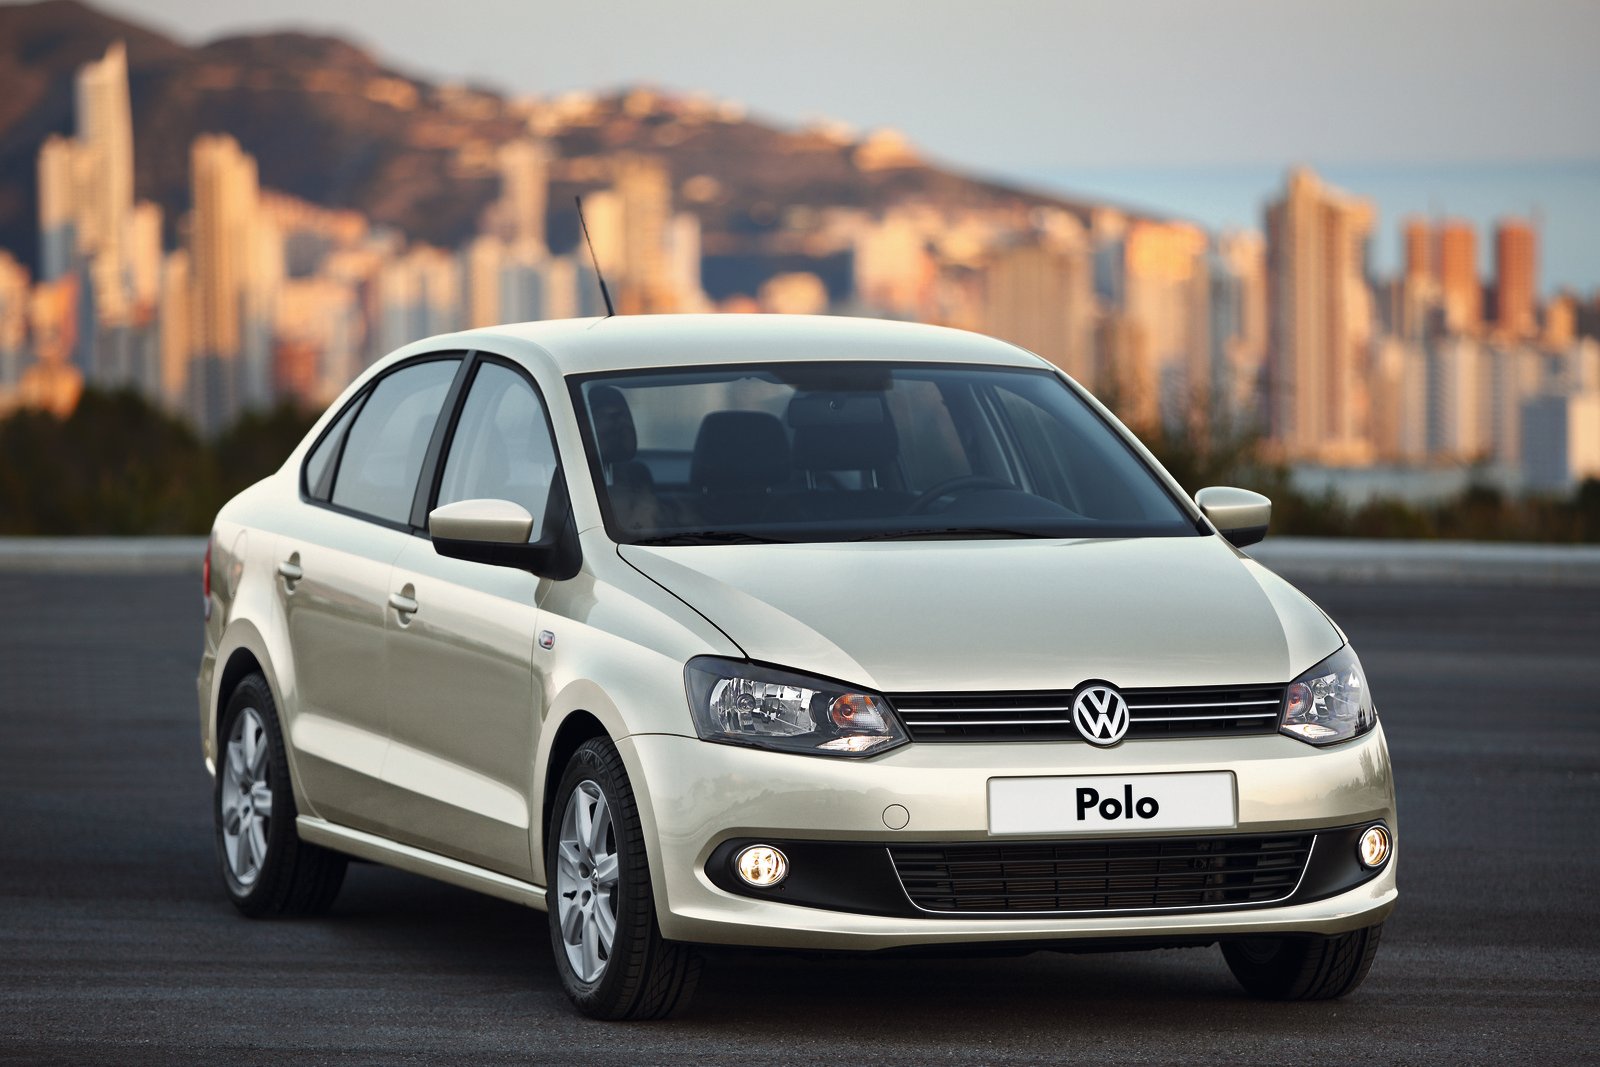 2011 Volkswagen Polo Sedan Unveiled In Russia